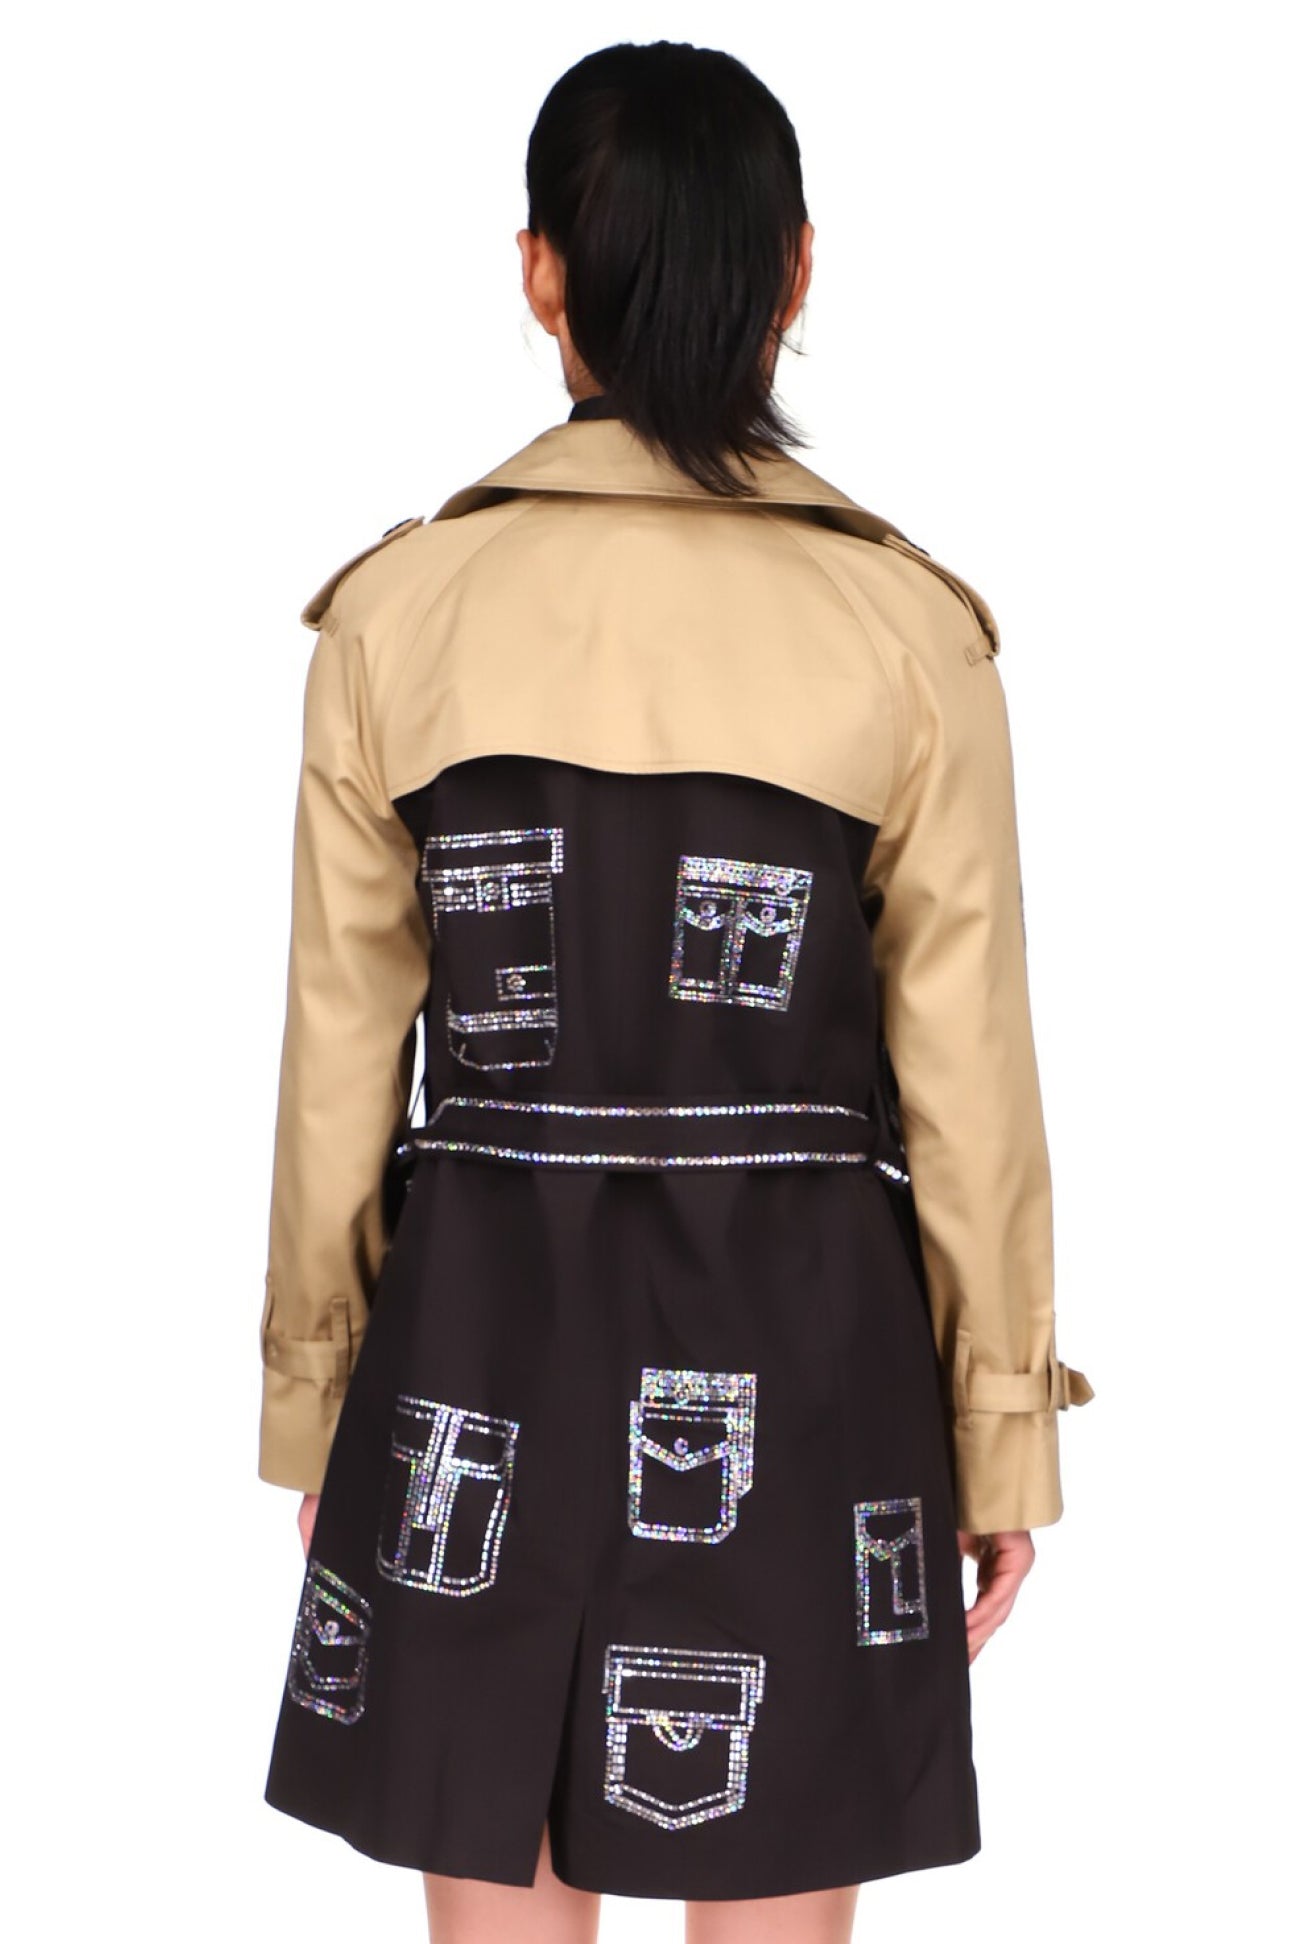 'POCKET TALK' BLACK TRENCH - Women's Jackets & Coats - Libertine